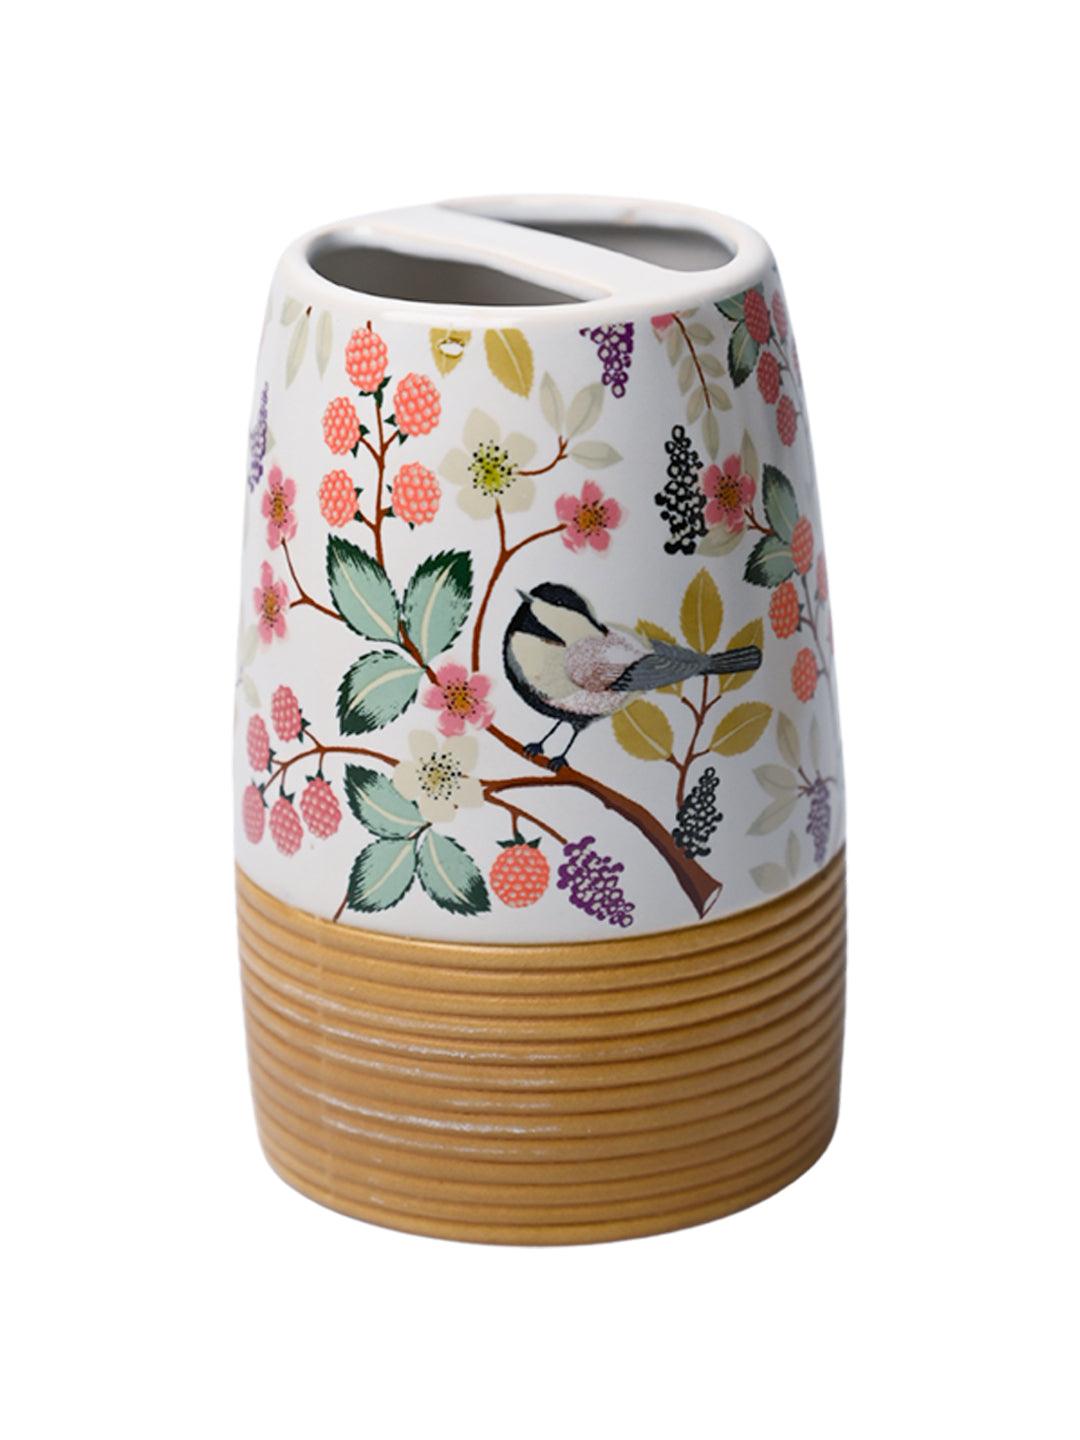 Multicolor Ceramic Cylindrical Bathroom Set Of 4 - Floral Design, Bath Accessories